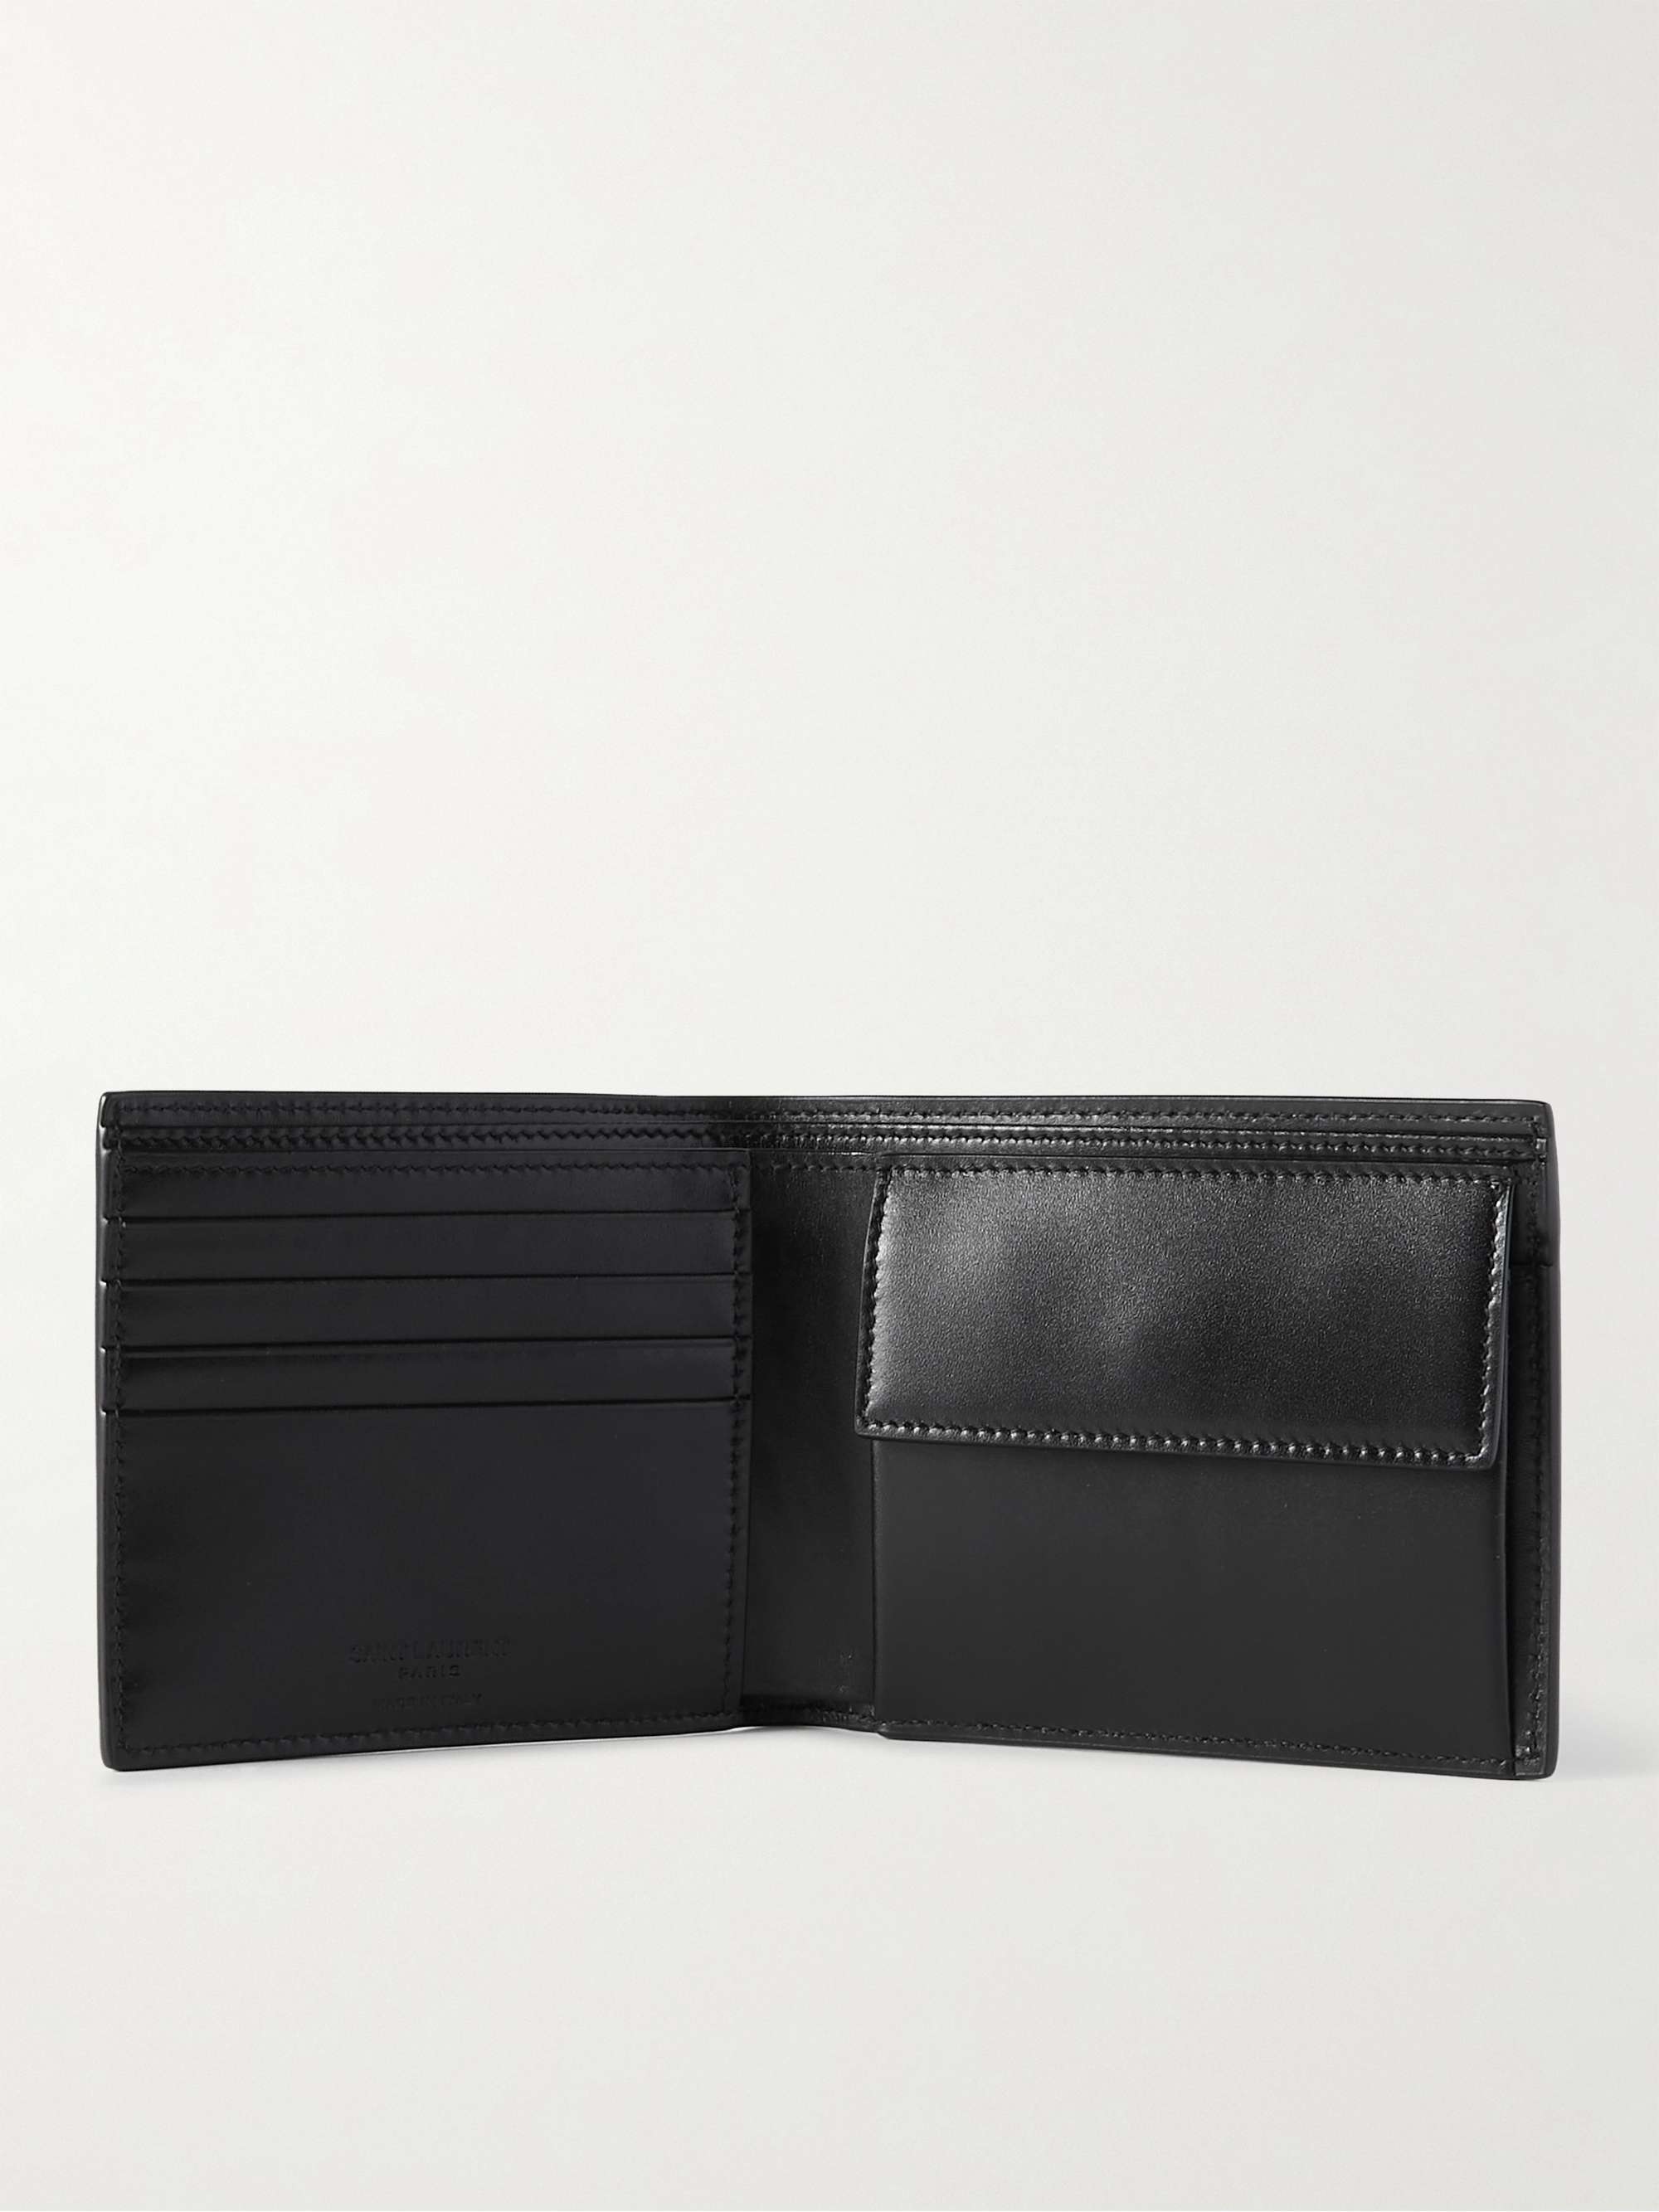 SAINT LAURENT Leather Billfold Wallet